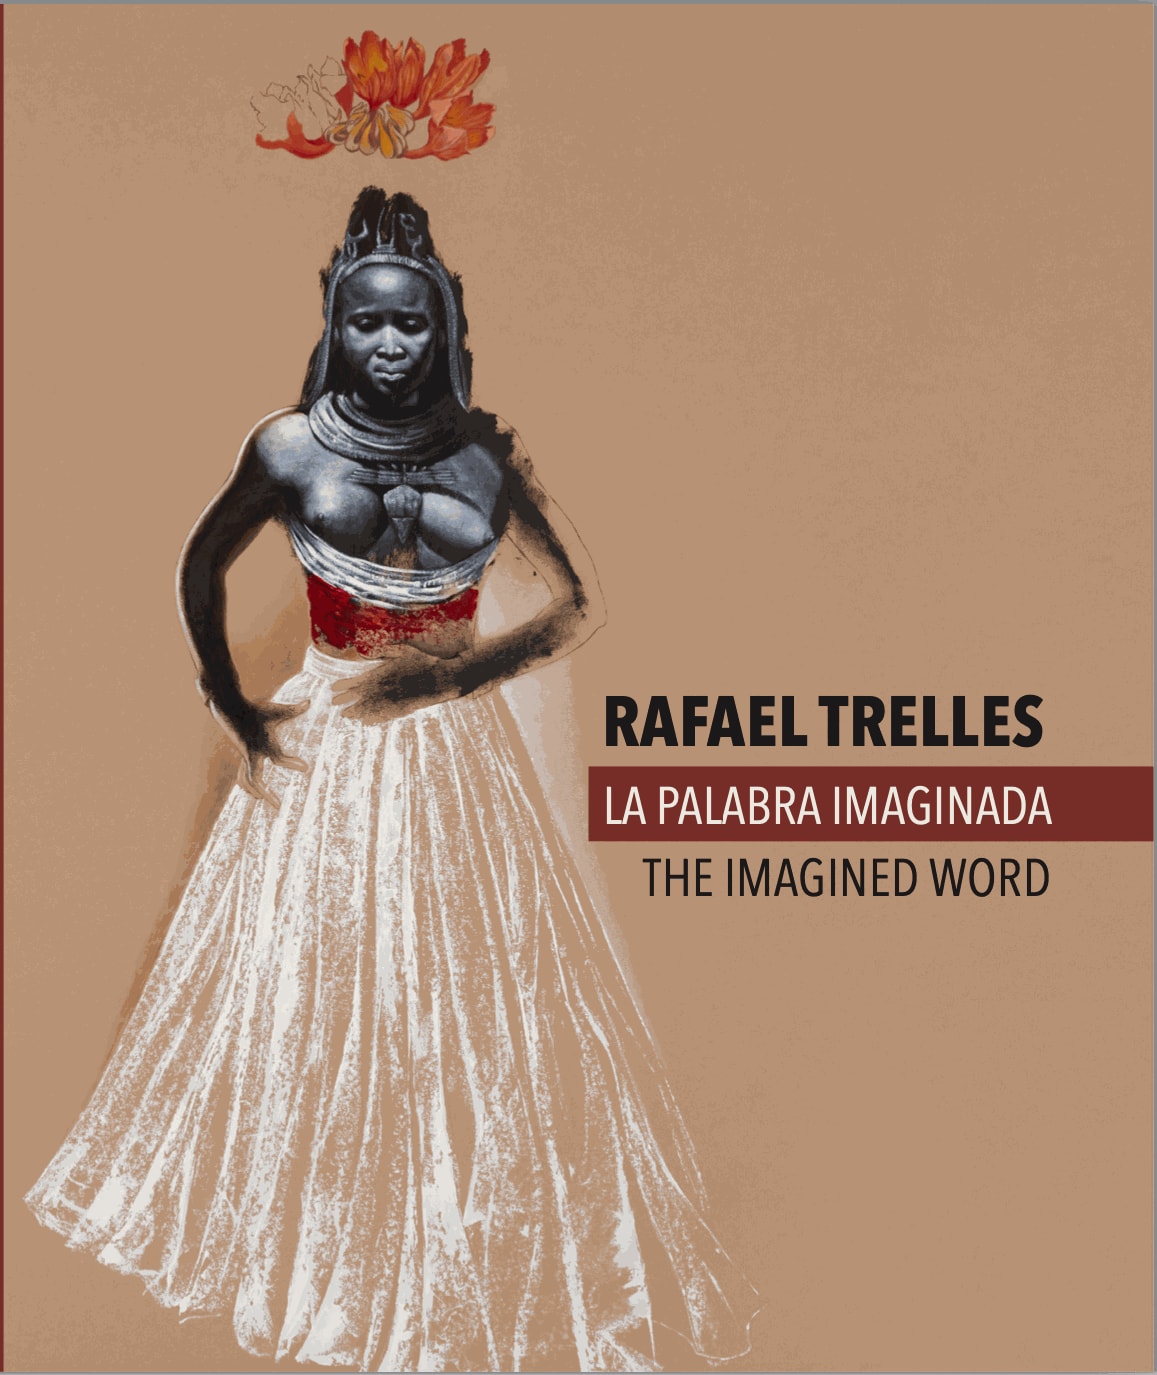 Rafael Trelles, The Imagined Word